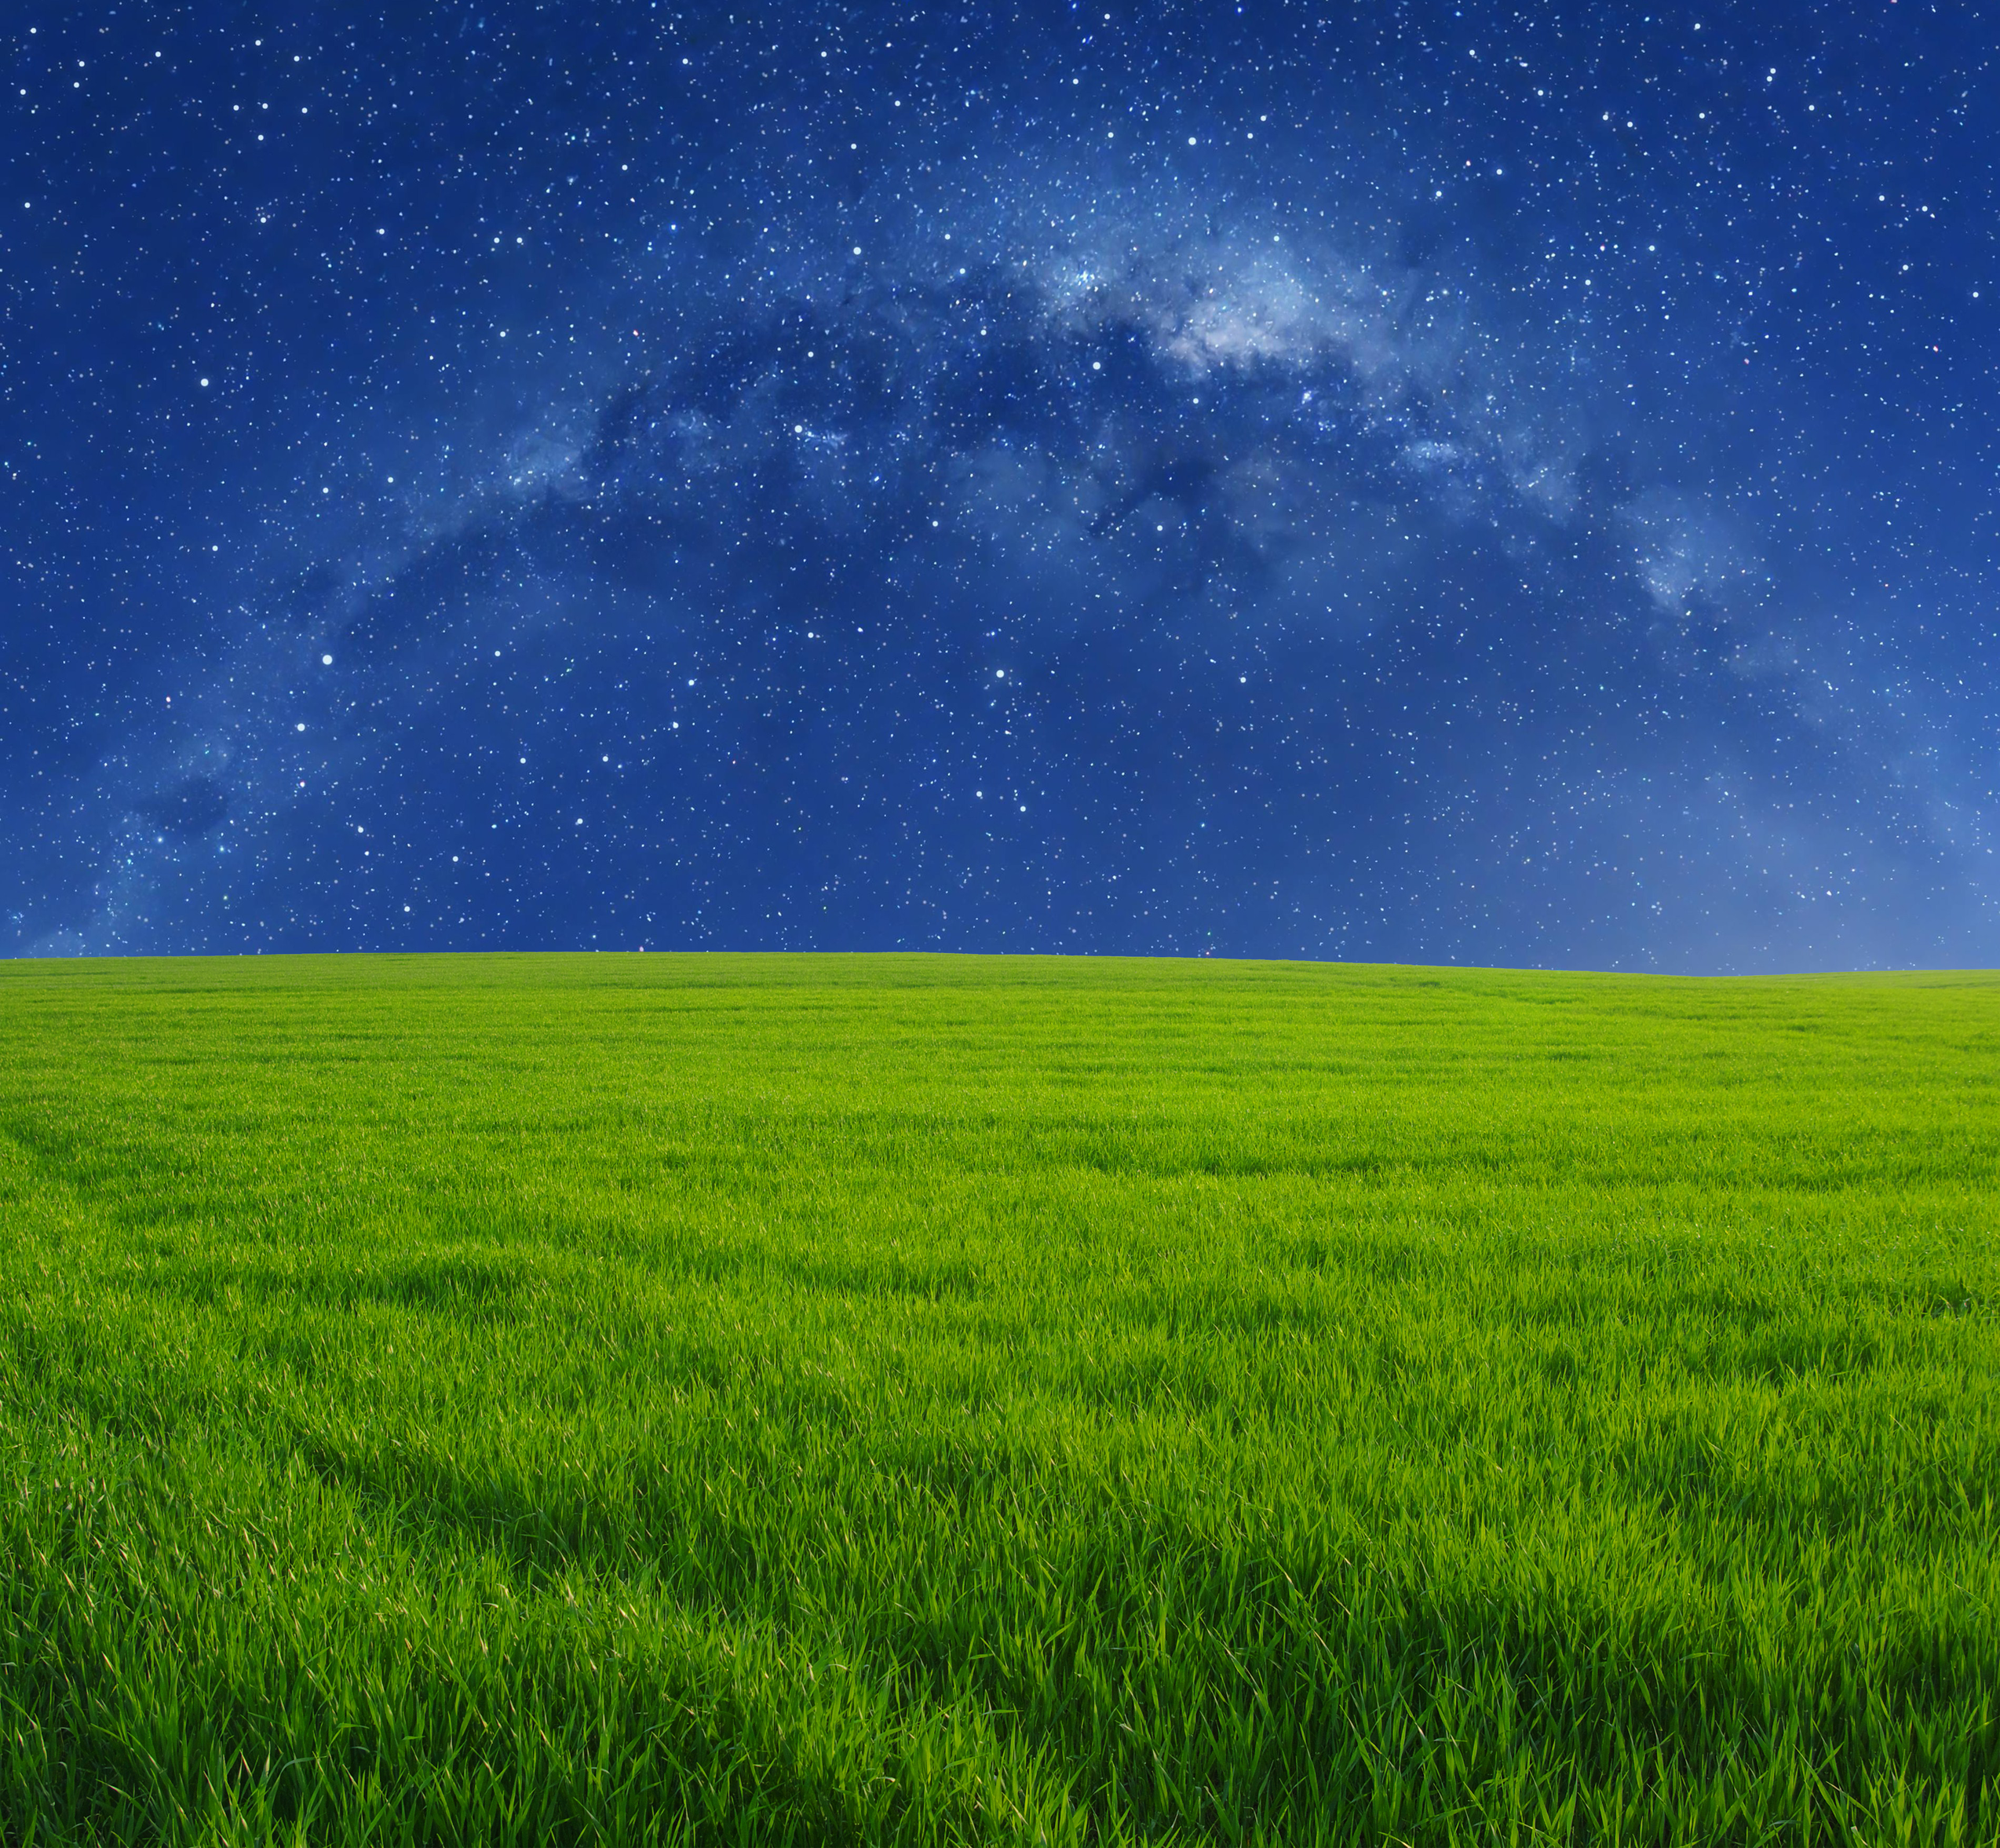 High Resolution Grass Field With Beautiful Sky By Dabestfox On Deviantart